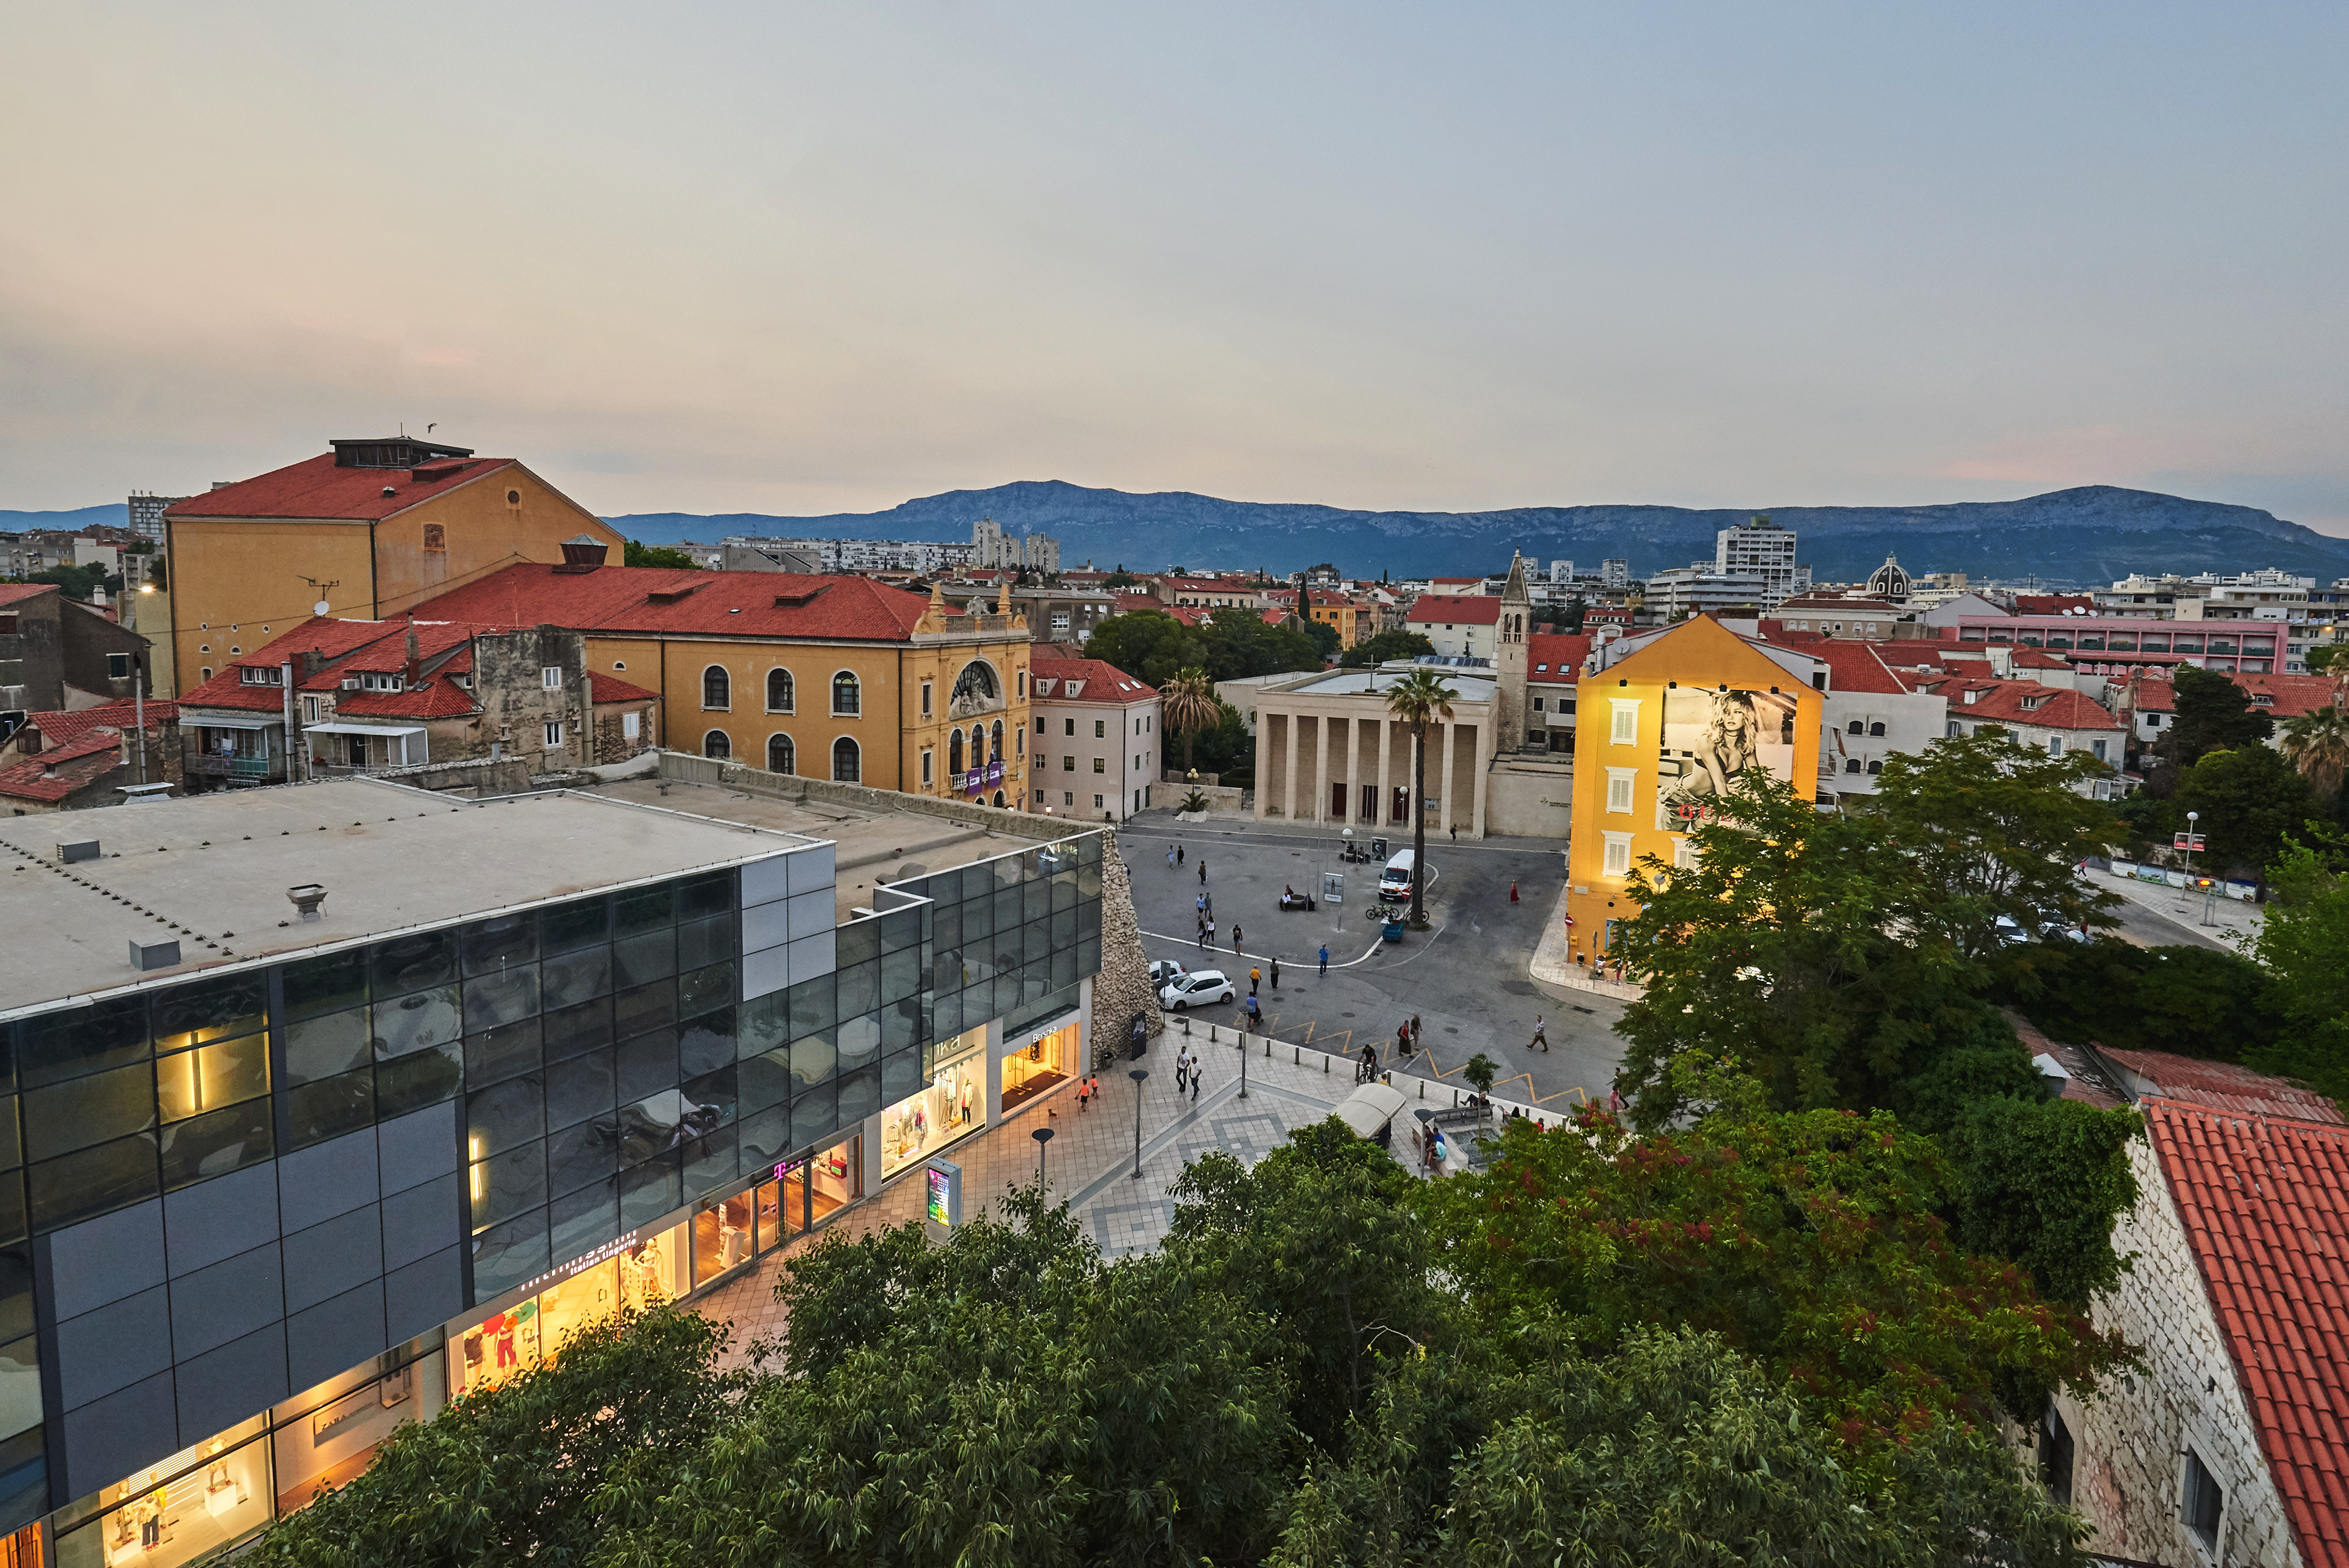 Penthouse Priuli Luxury Apartment - Flats for Rent in Split,  Splitsko-dalmatinska županija, Croatia - Airbnb